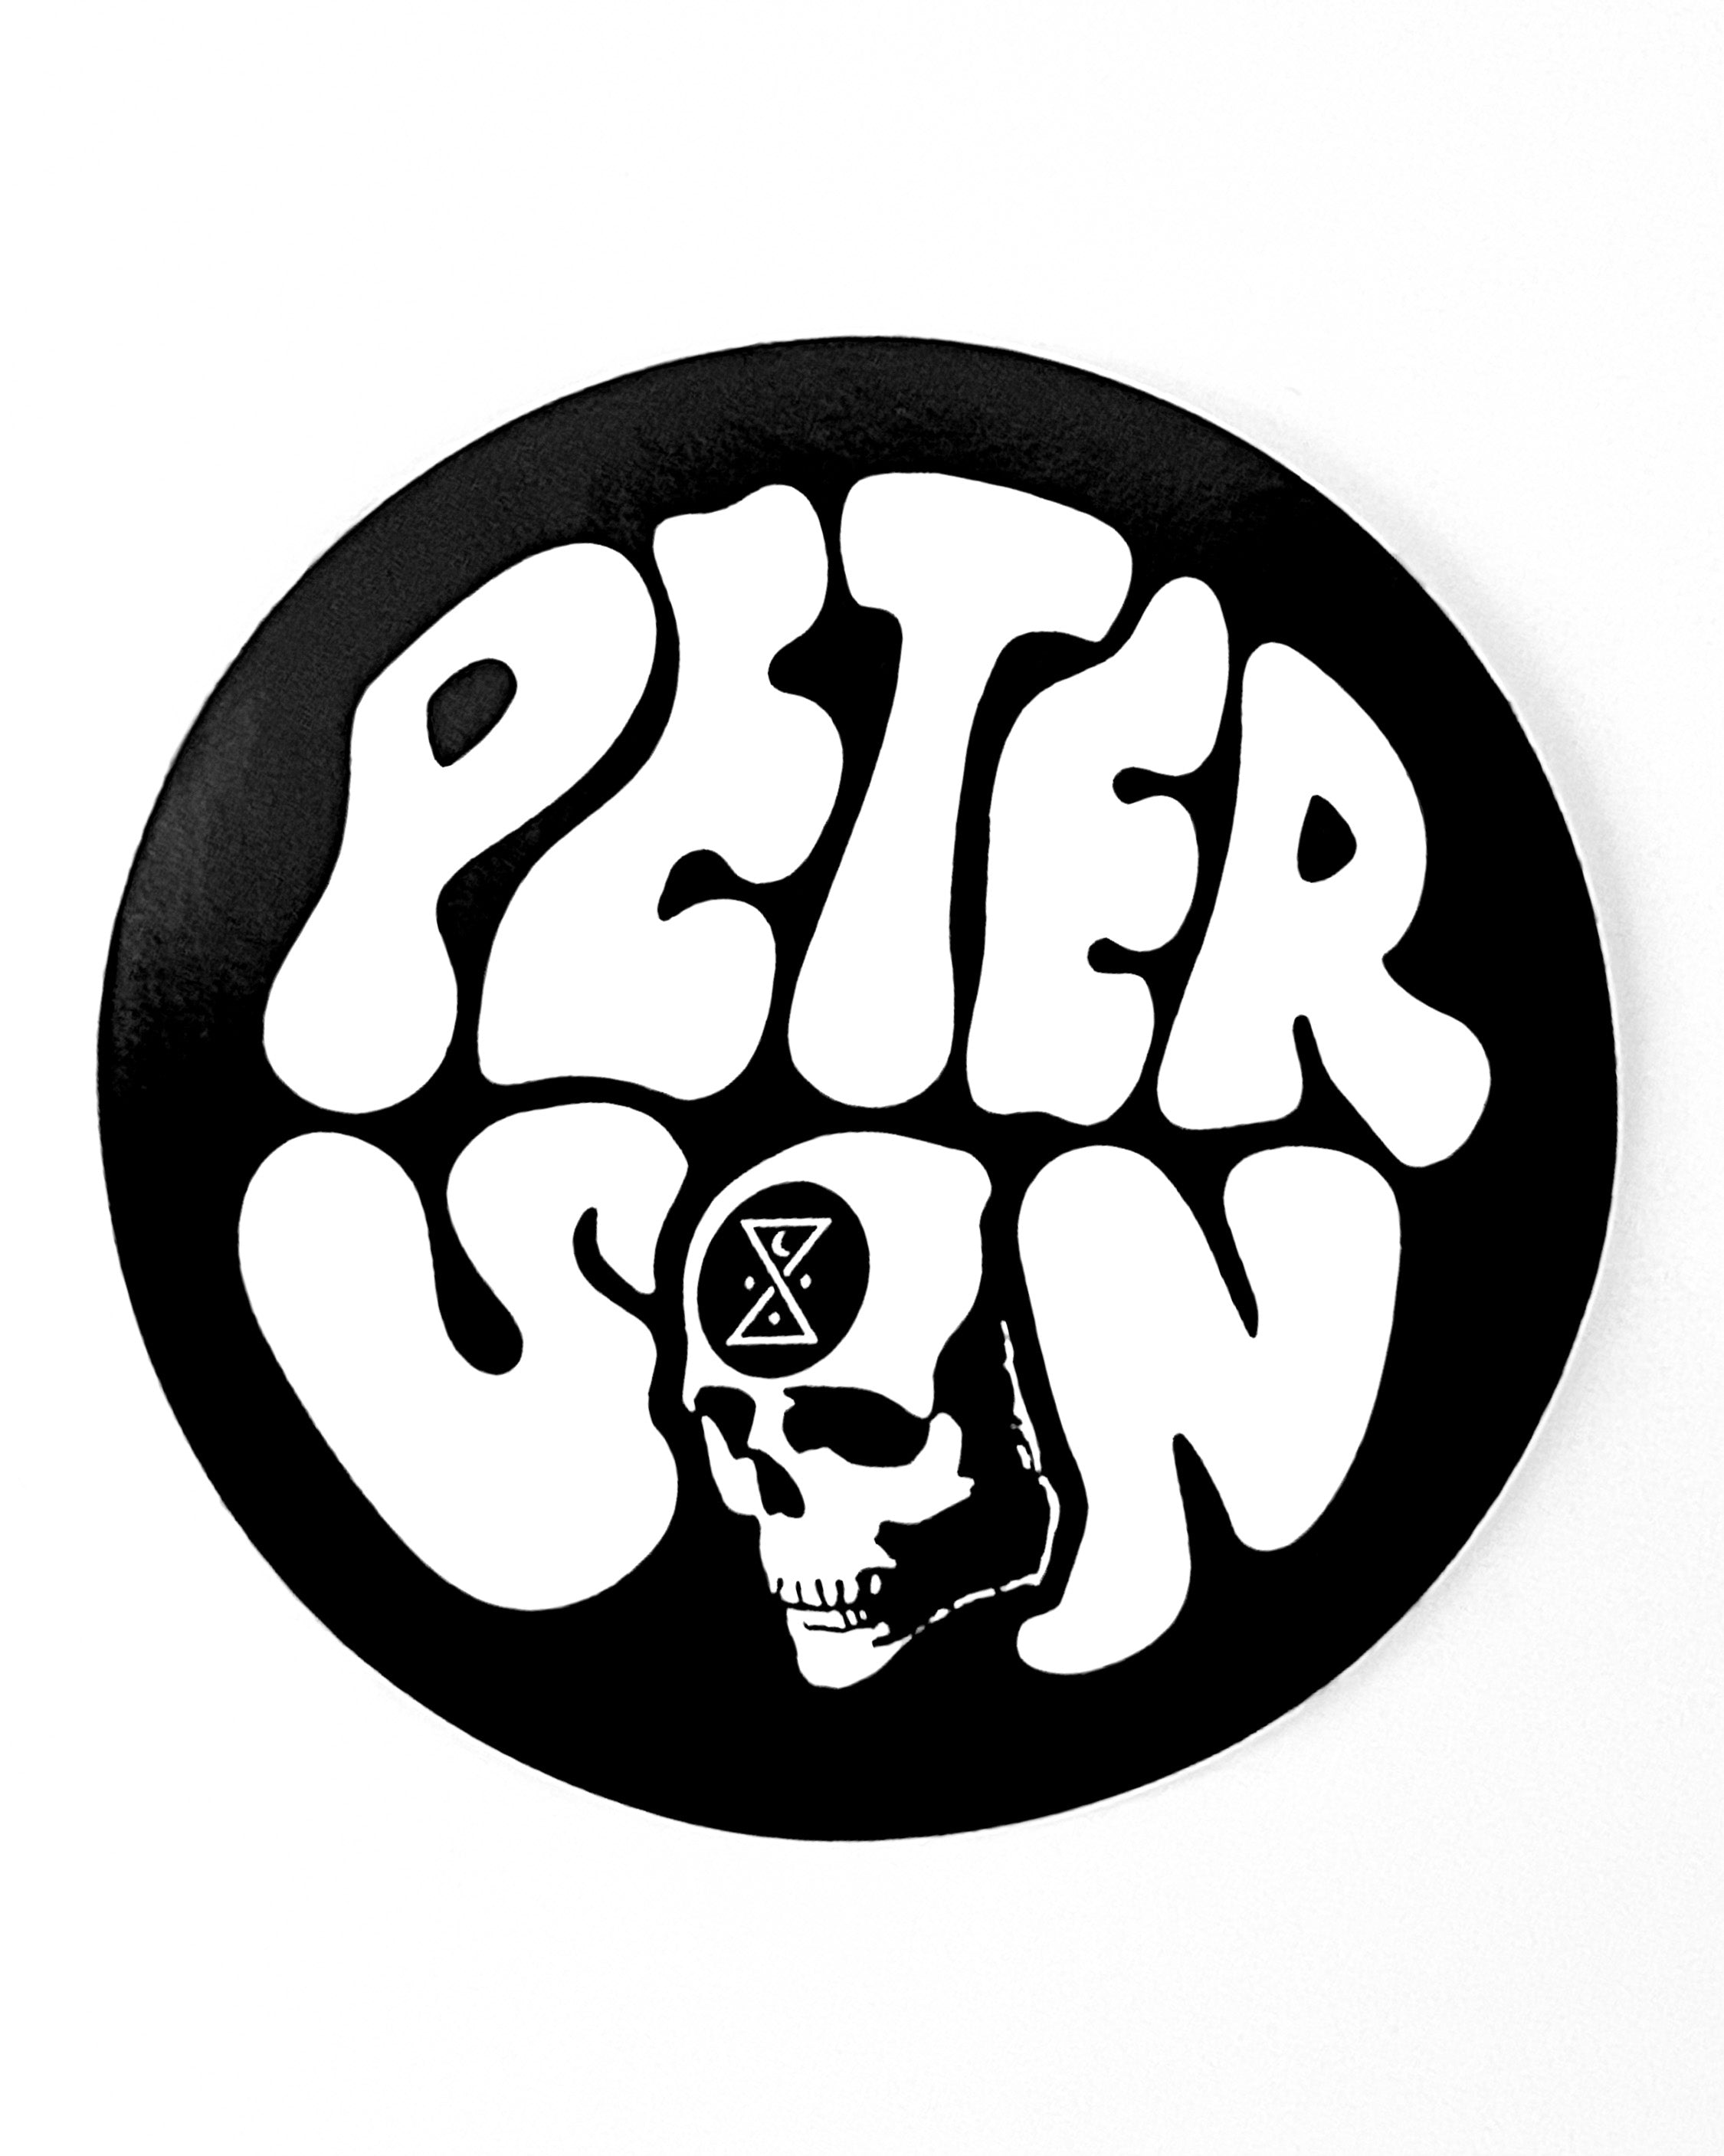 Ghost/Ship x Josh Peterson logo on Black Circle Sticker - Large - GHOSTSHIP.Supply